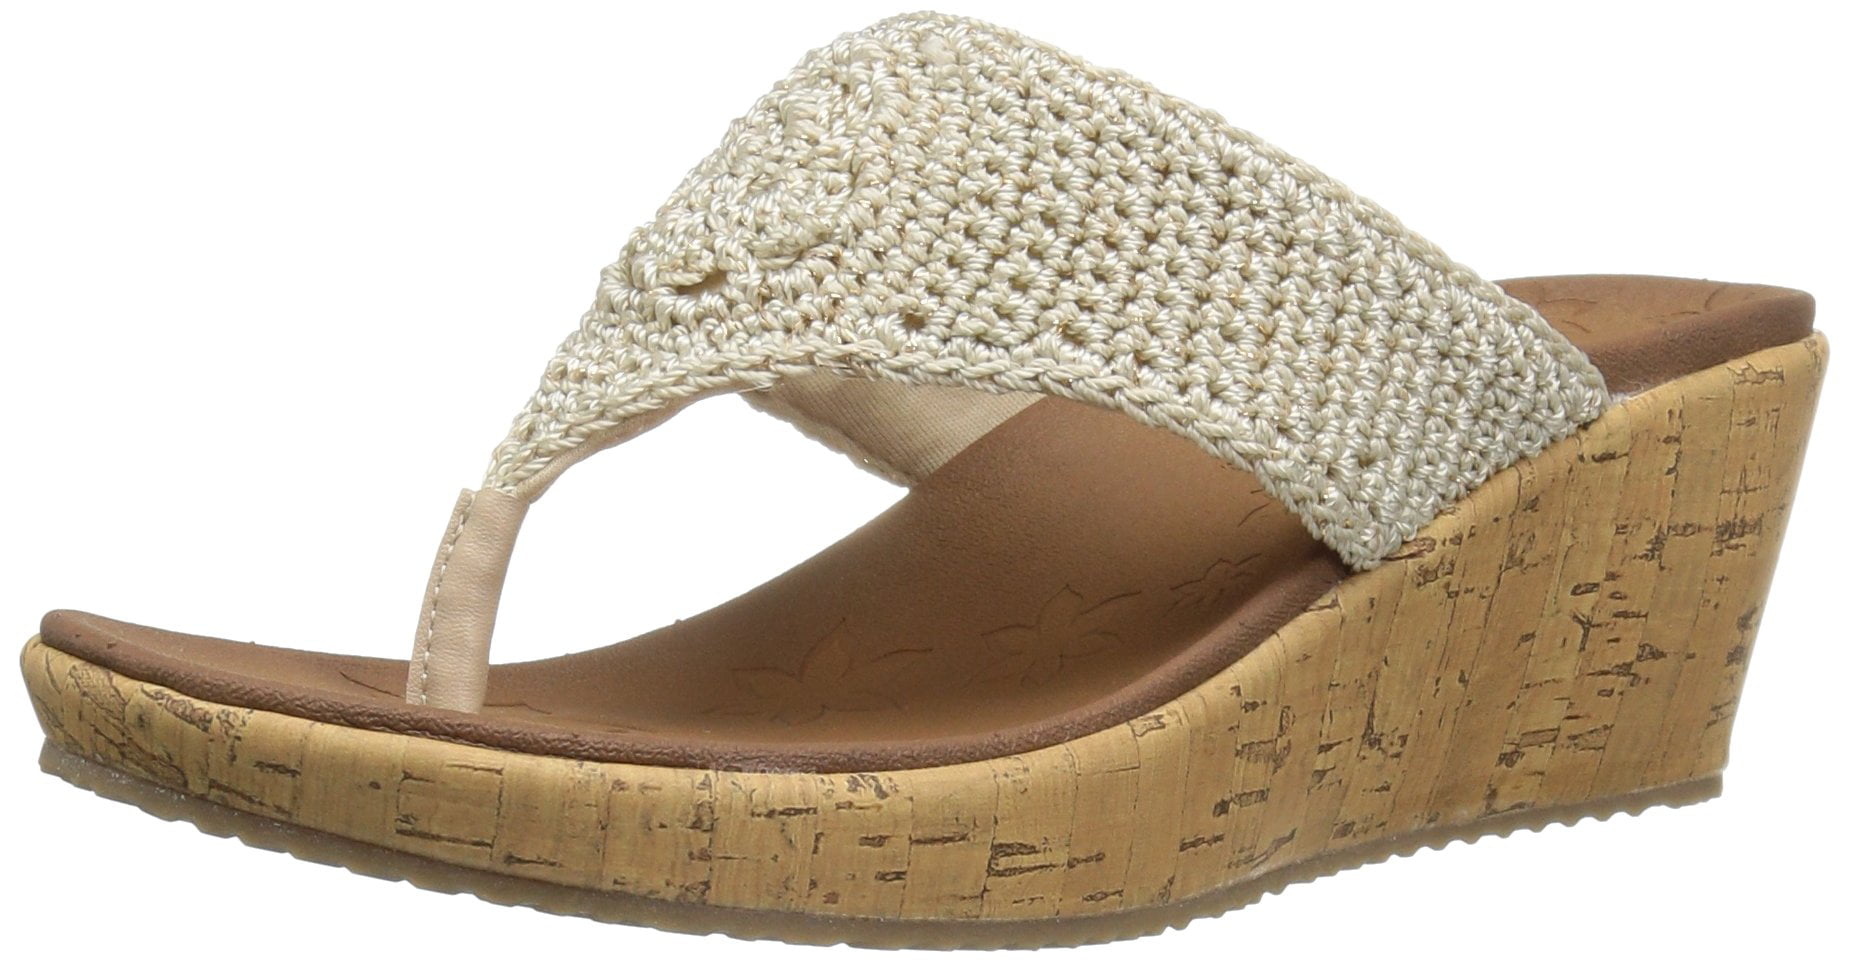 Beverlee Wedge Sandal,Natural Crochet 